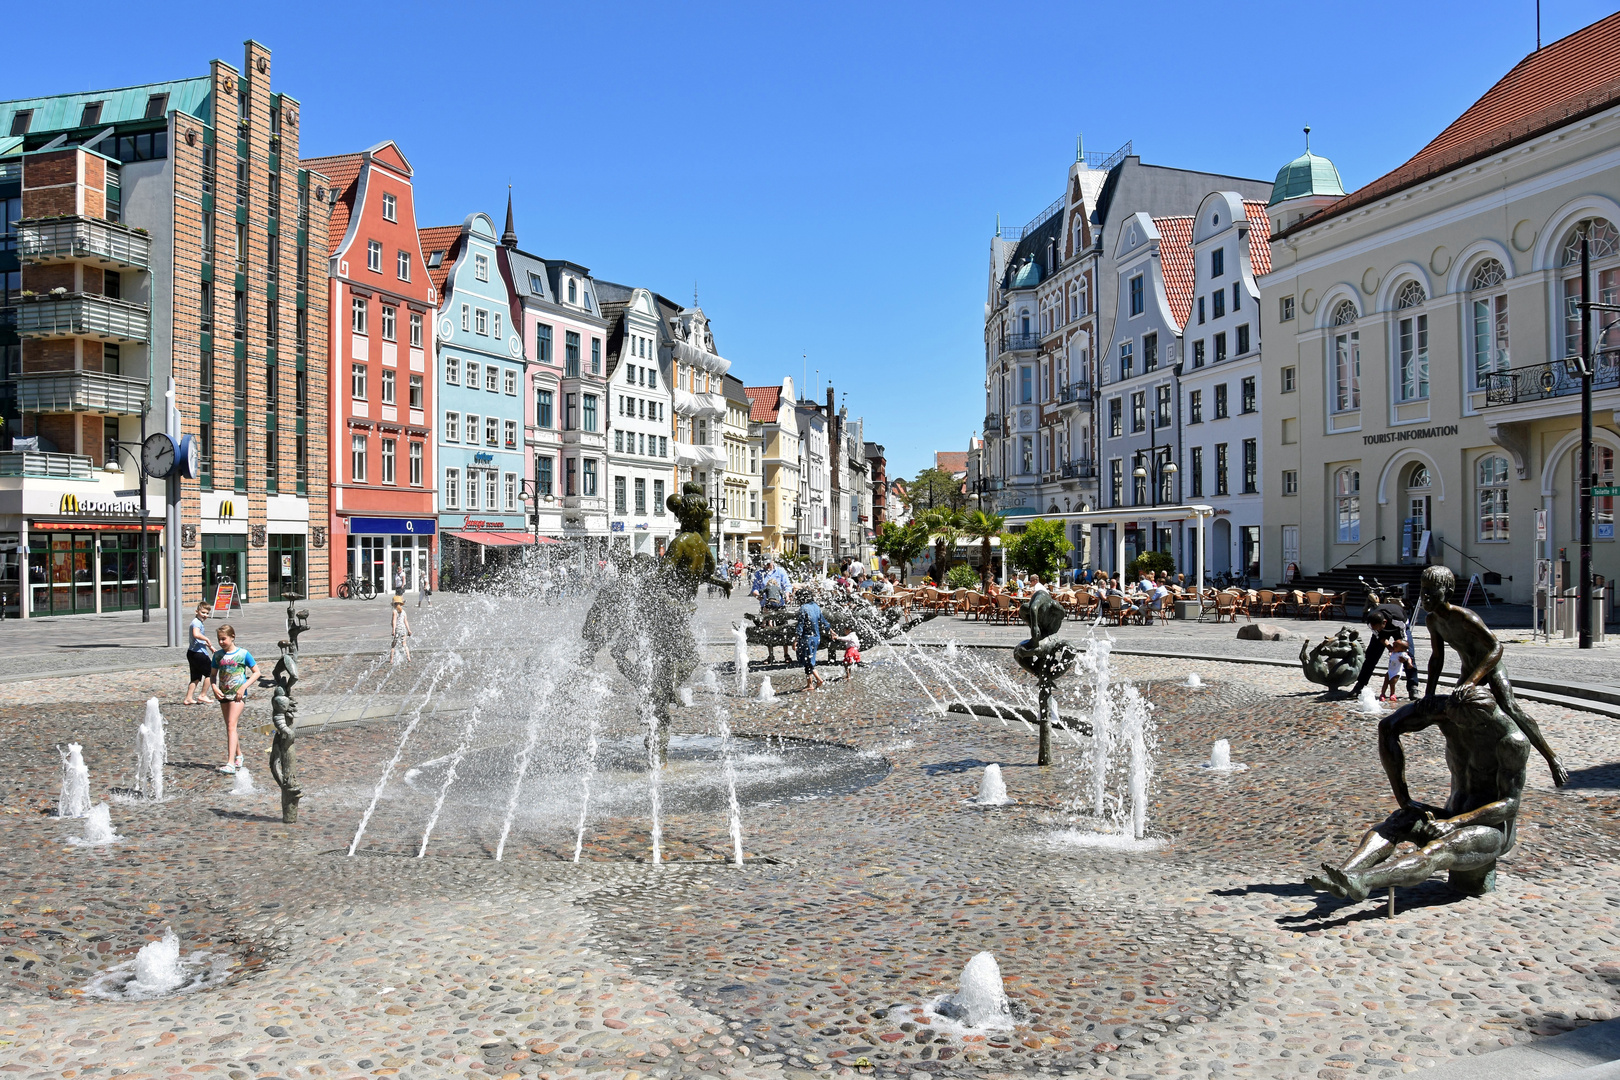 Der "Brunnen der Lebensfreude" in Rostocks Innenstadt